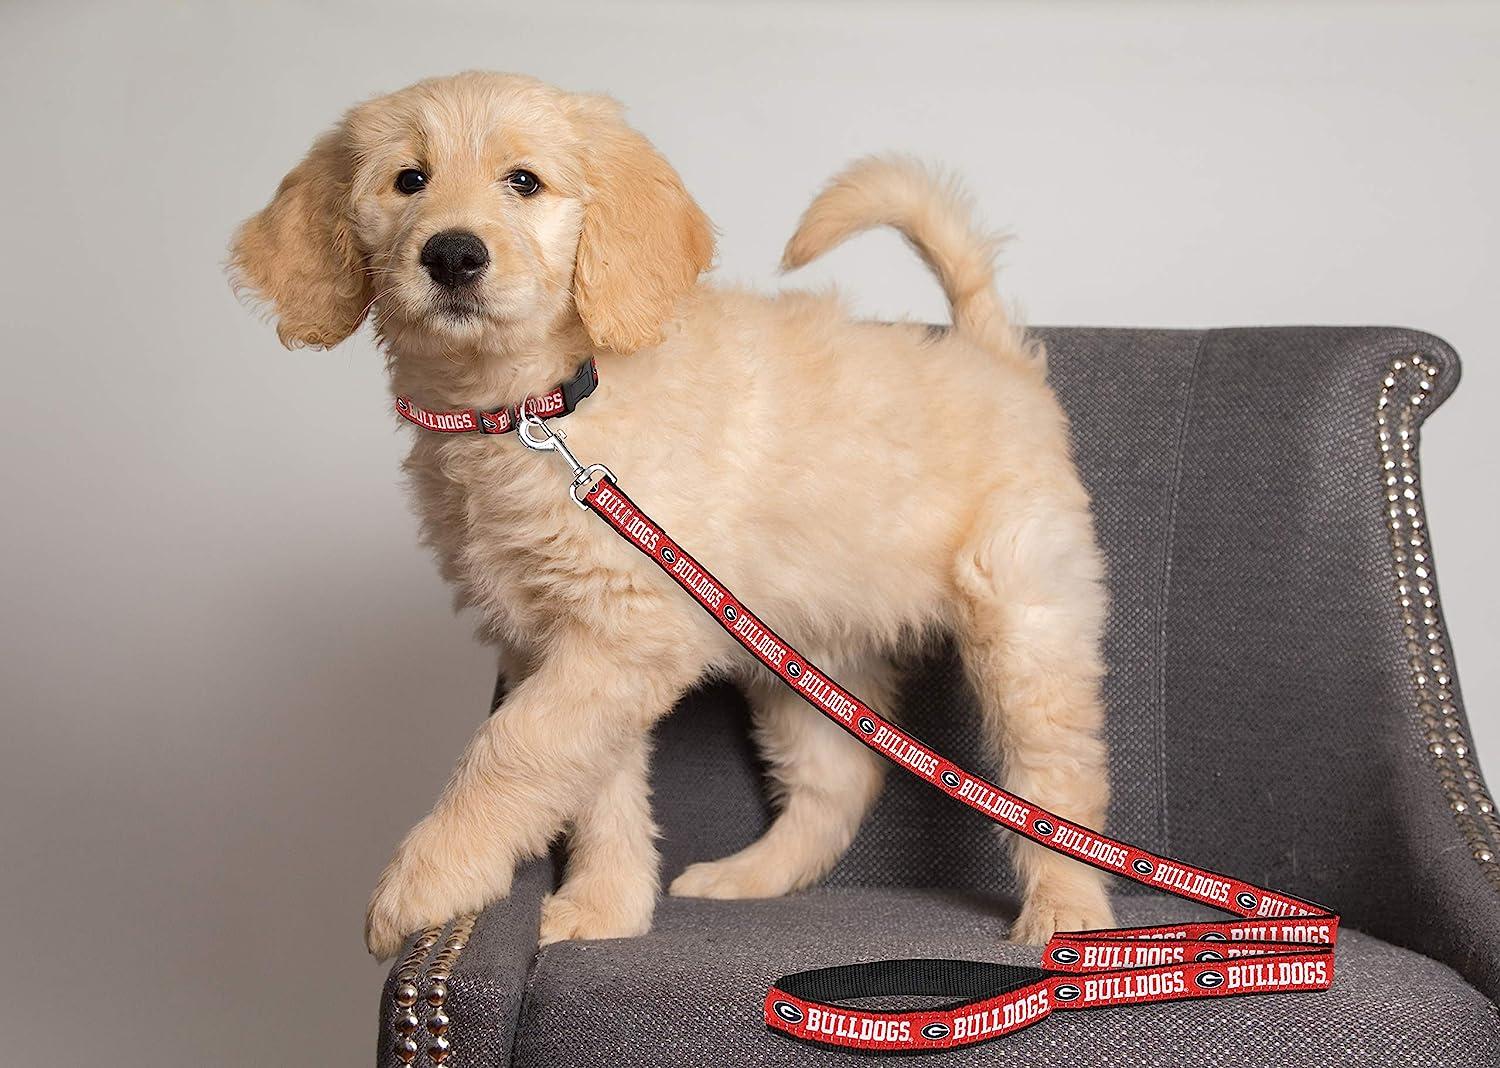  Pets First Collegiate Pet Accessories, Dog Collar